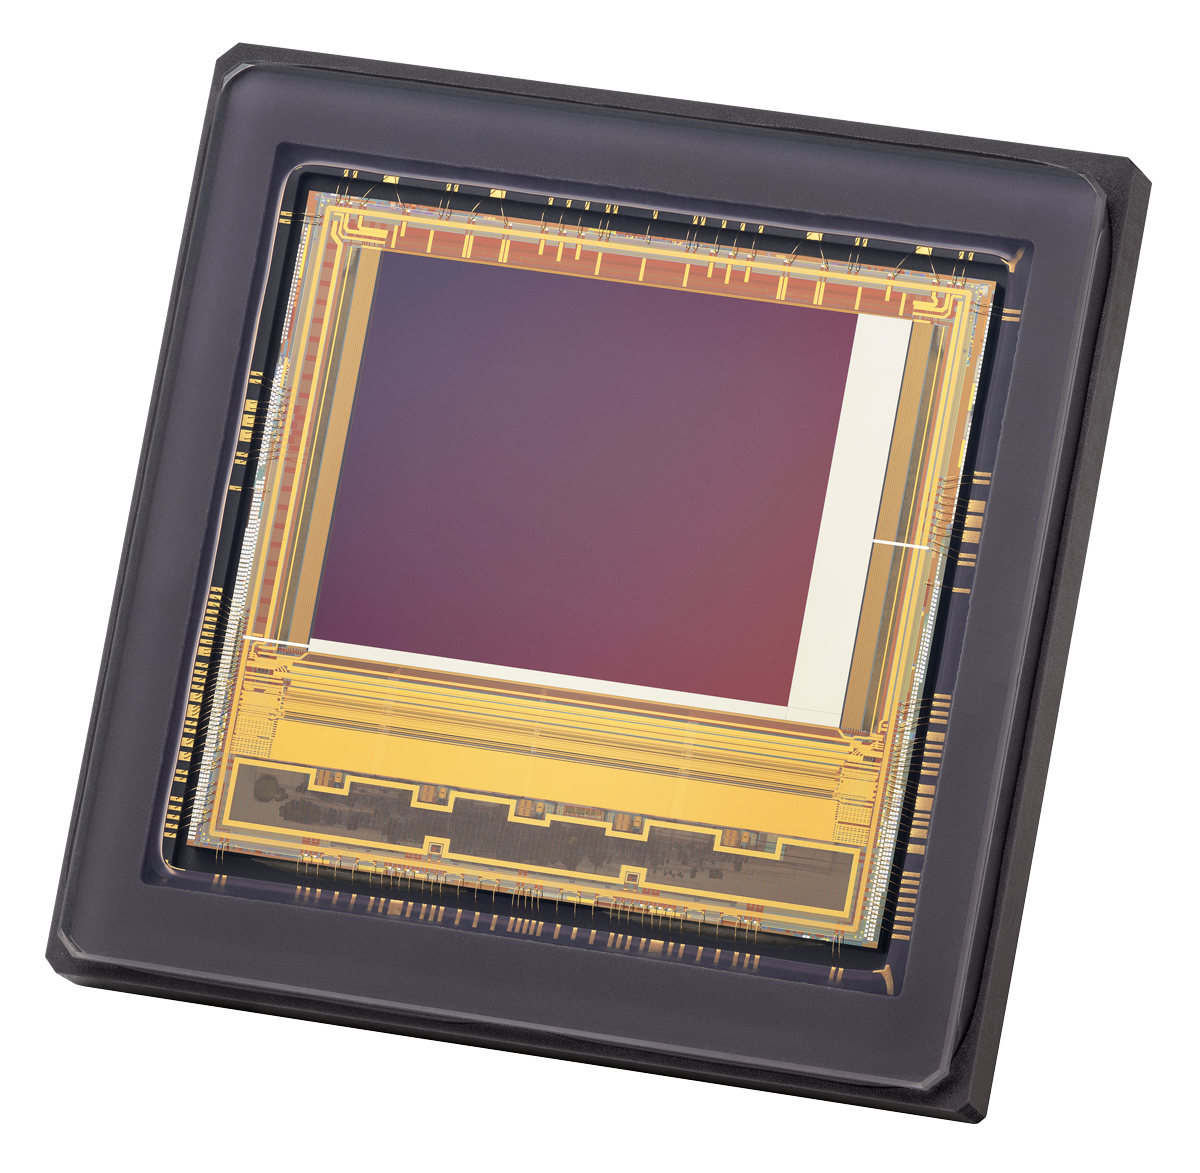 Teledyne e2vが次世代の低照度CMOSセンサを発表 